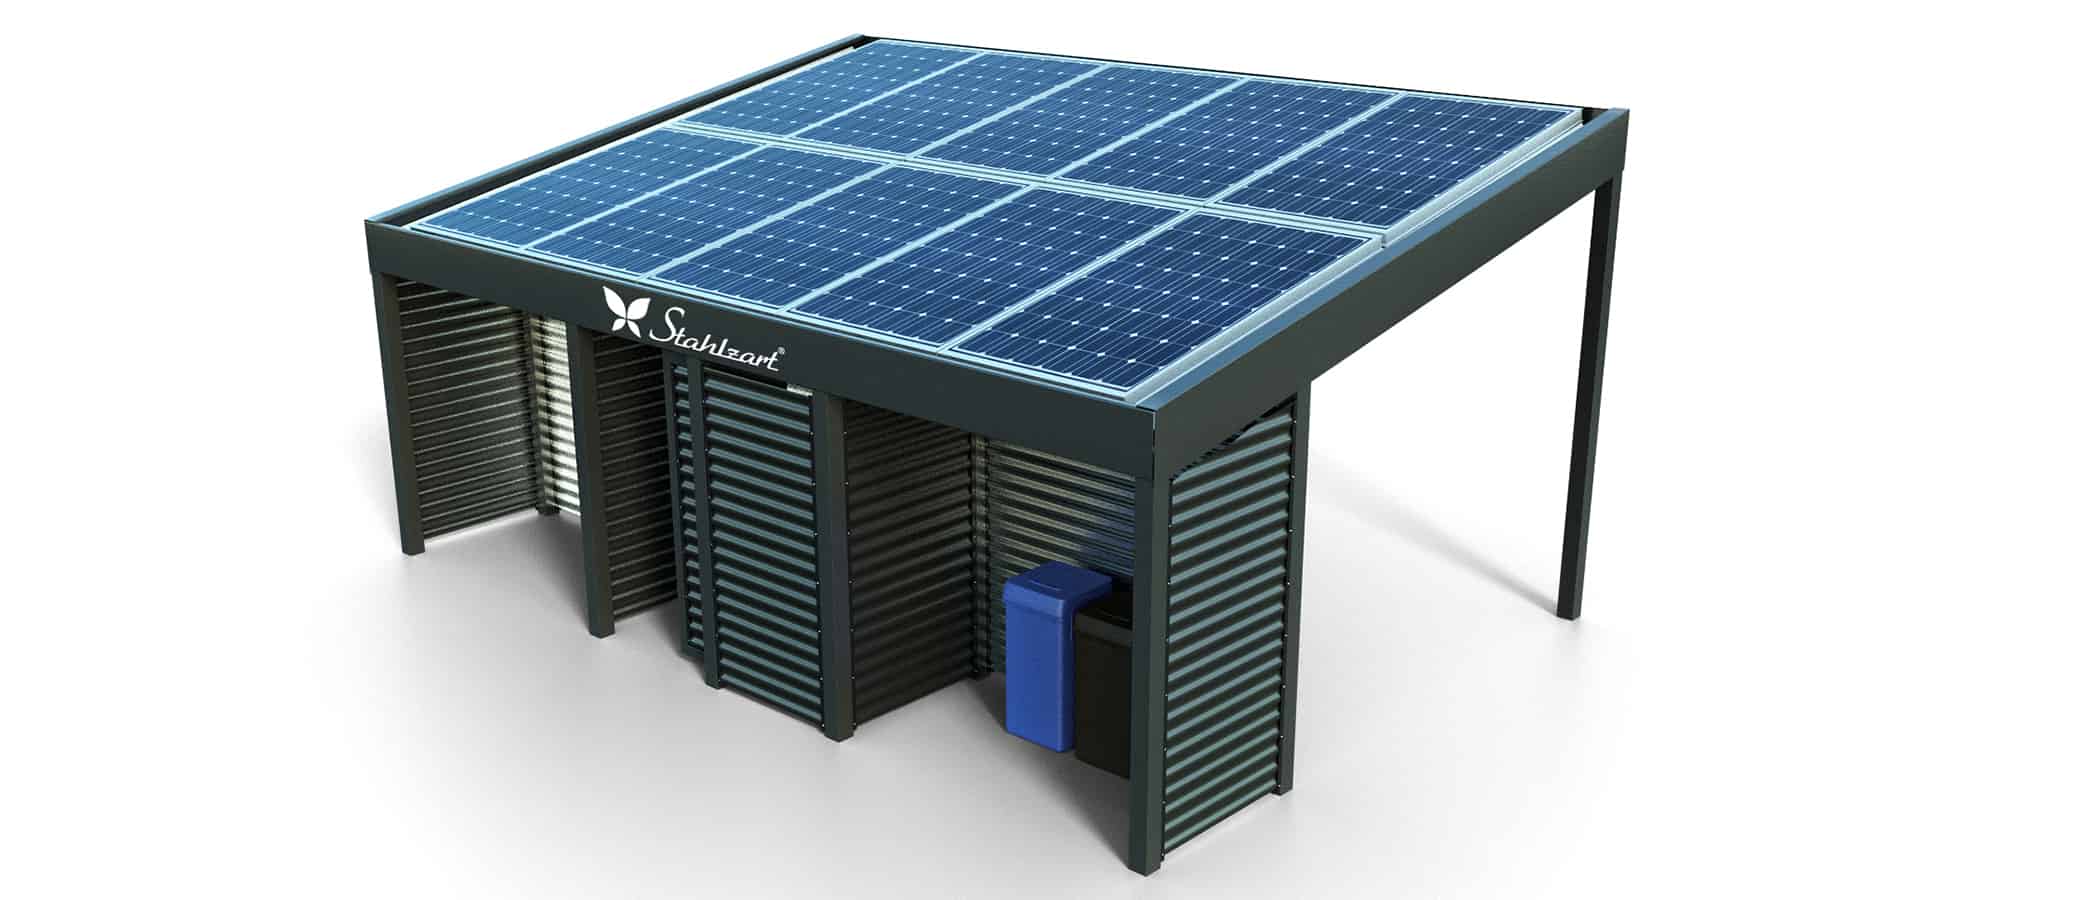 solar-carport-mit-schraegdach-solar-carports-e-fahrzeuge-pv-anlage-solarcarport-strom-solaranalge-e-auto-doppelcarport-metall-stahl-mit-schuppen-muelltonnen-modern-stahlzart